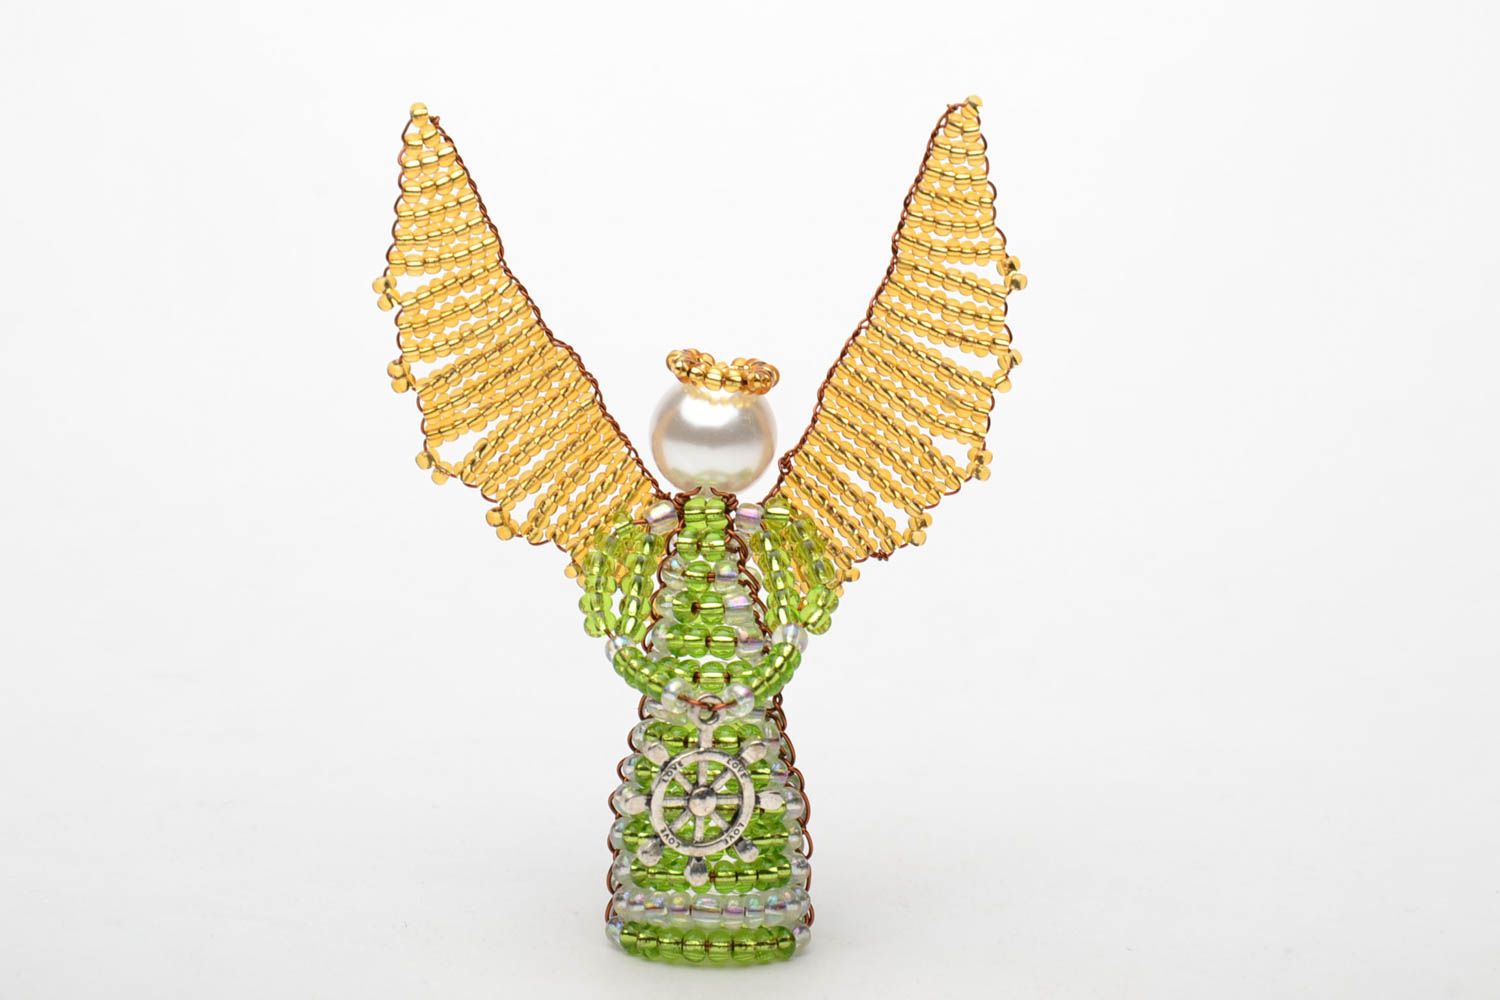 Beaded angel figurine photo 3